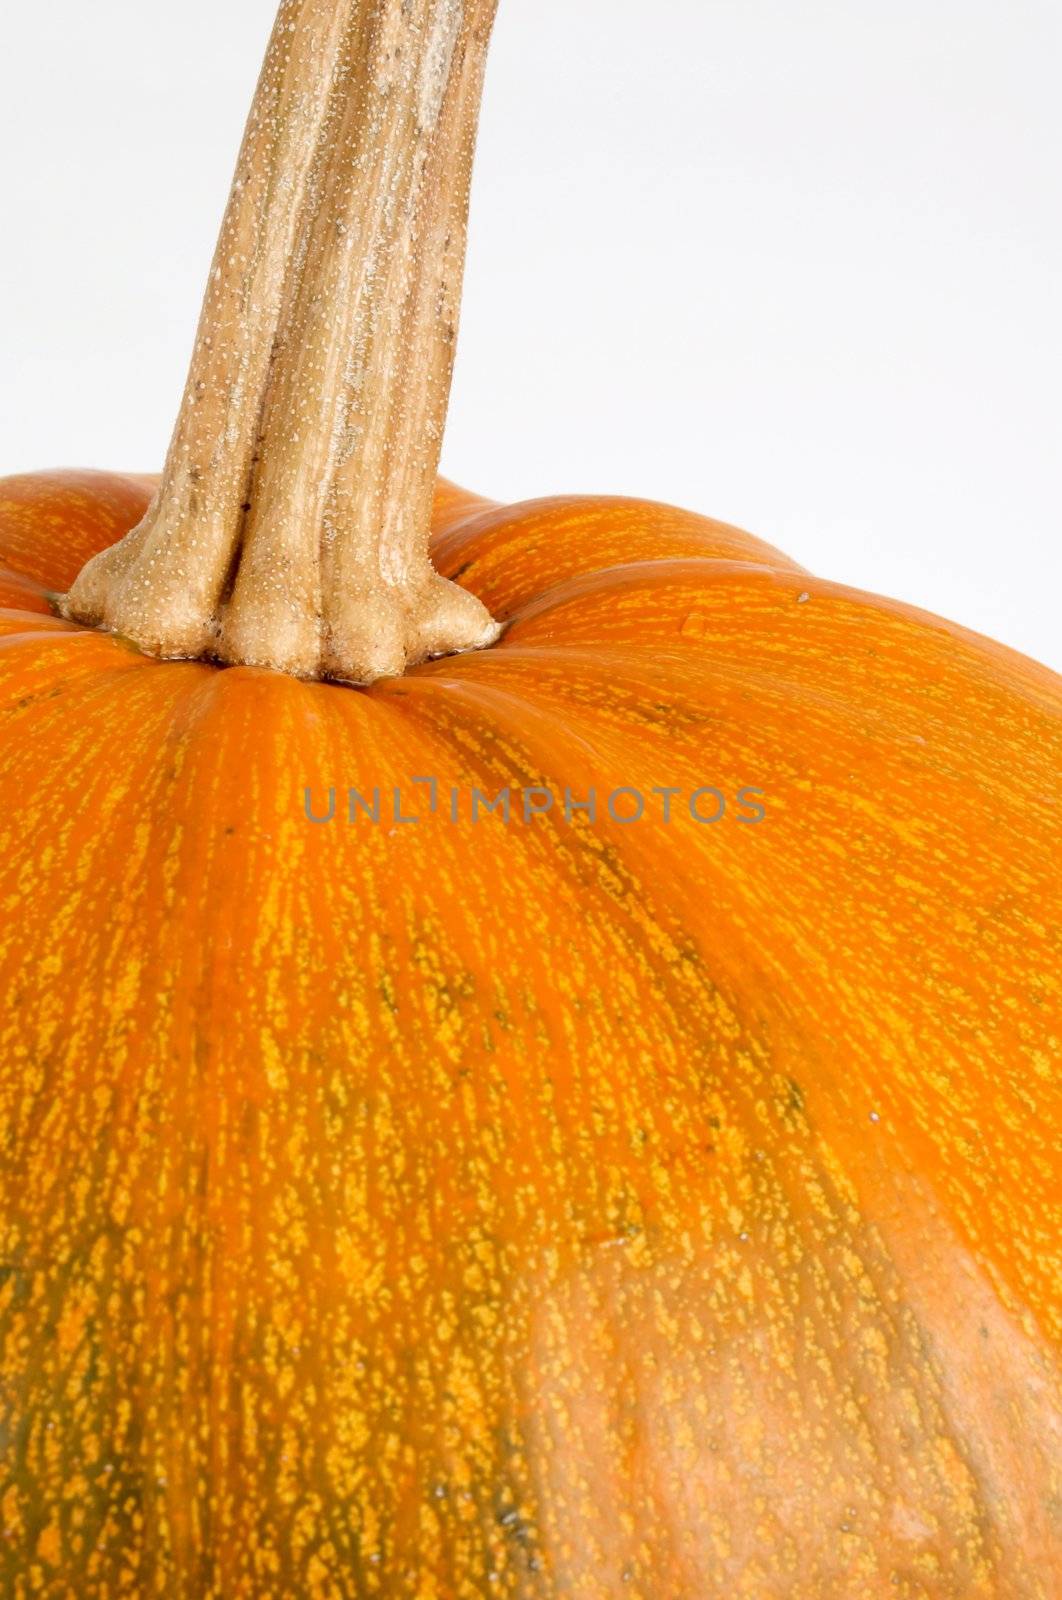 An image of part of yellow pumpkin